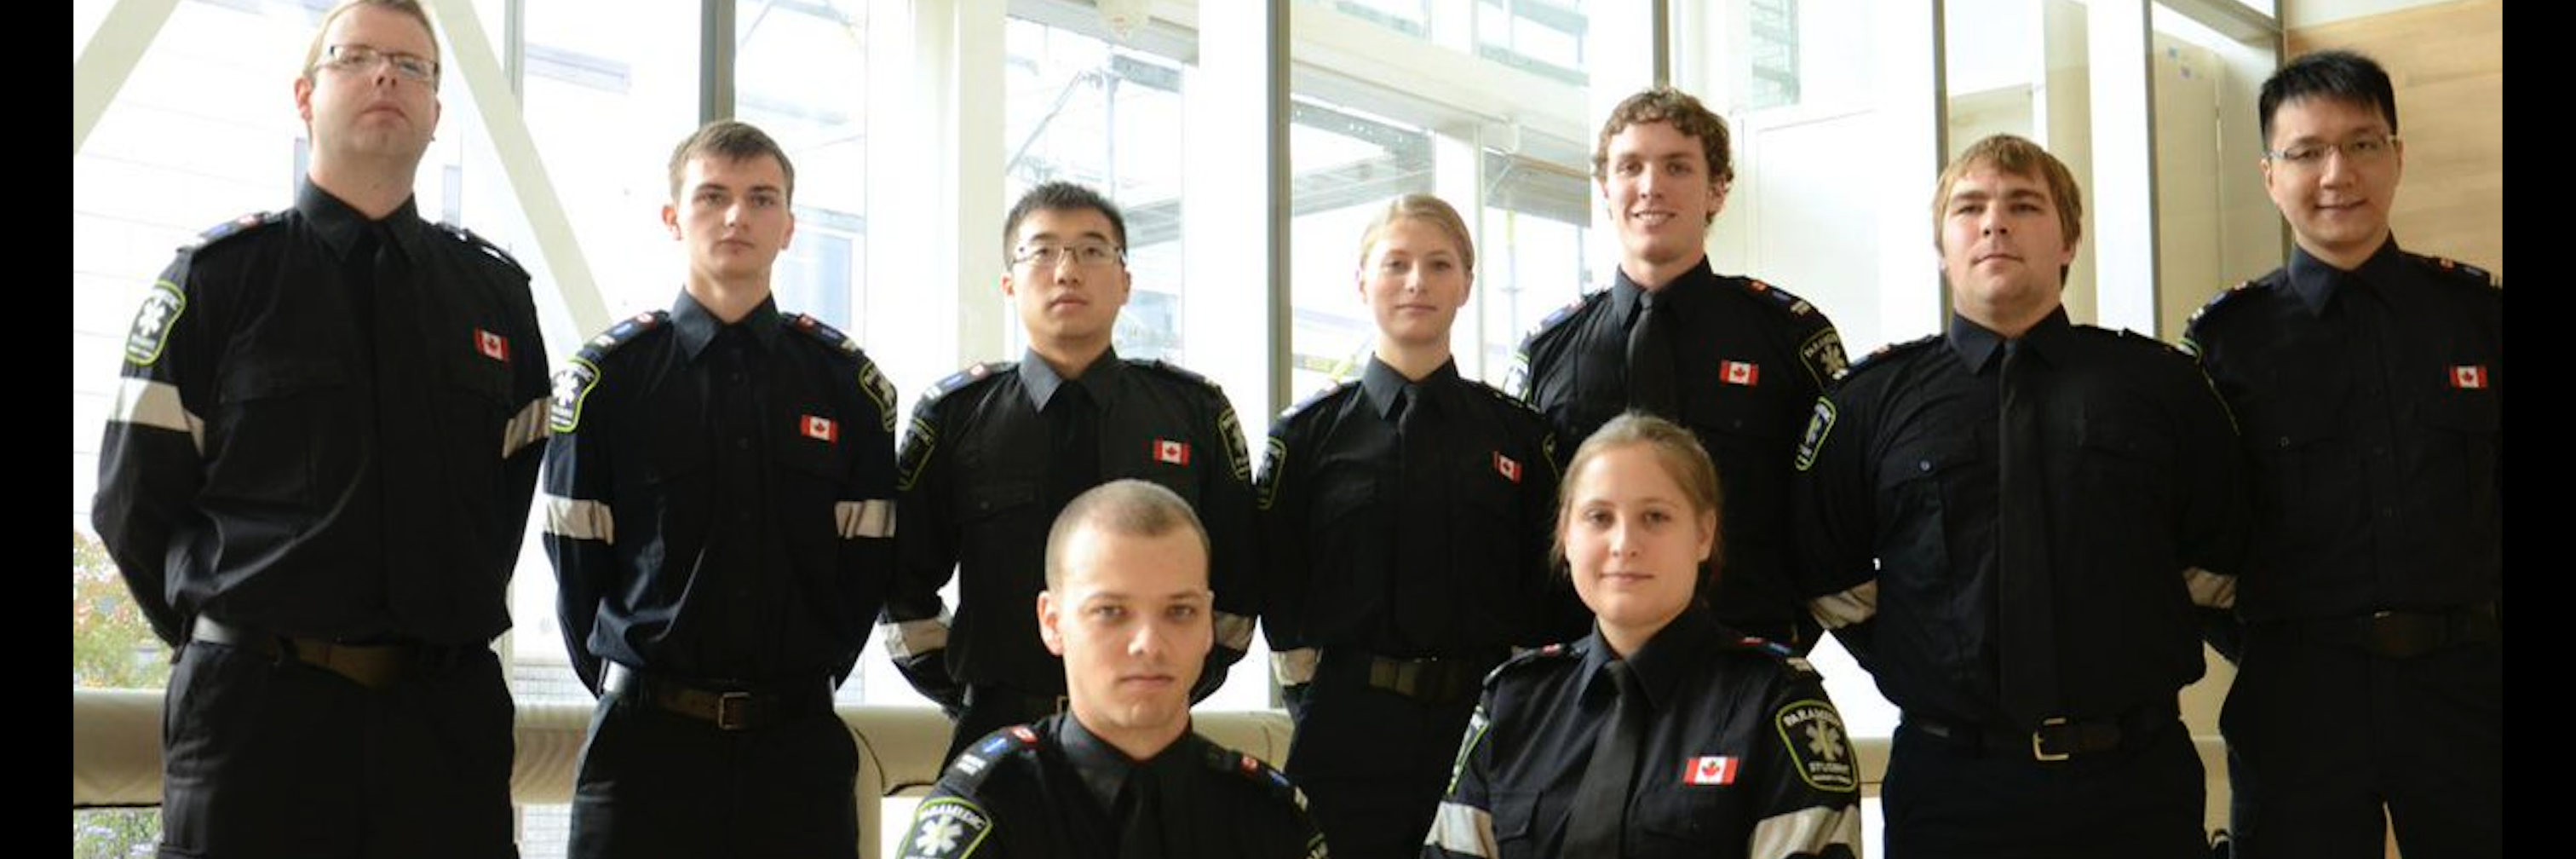 Paramedicine students posing in uniform against a window